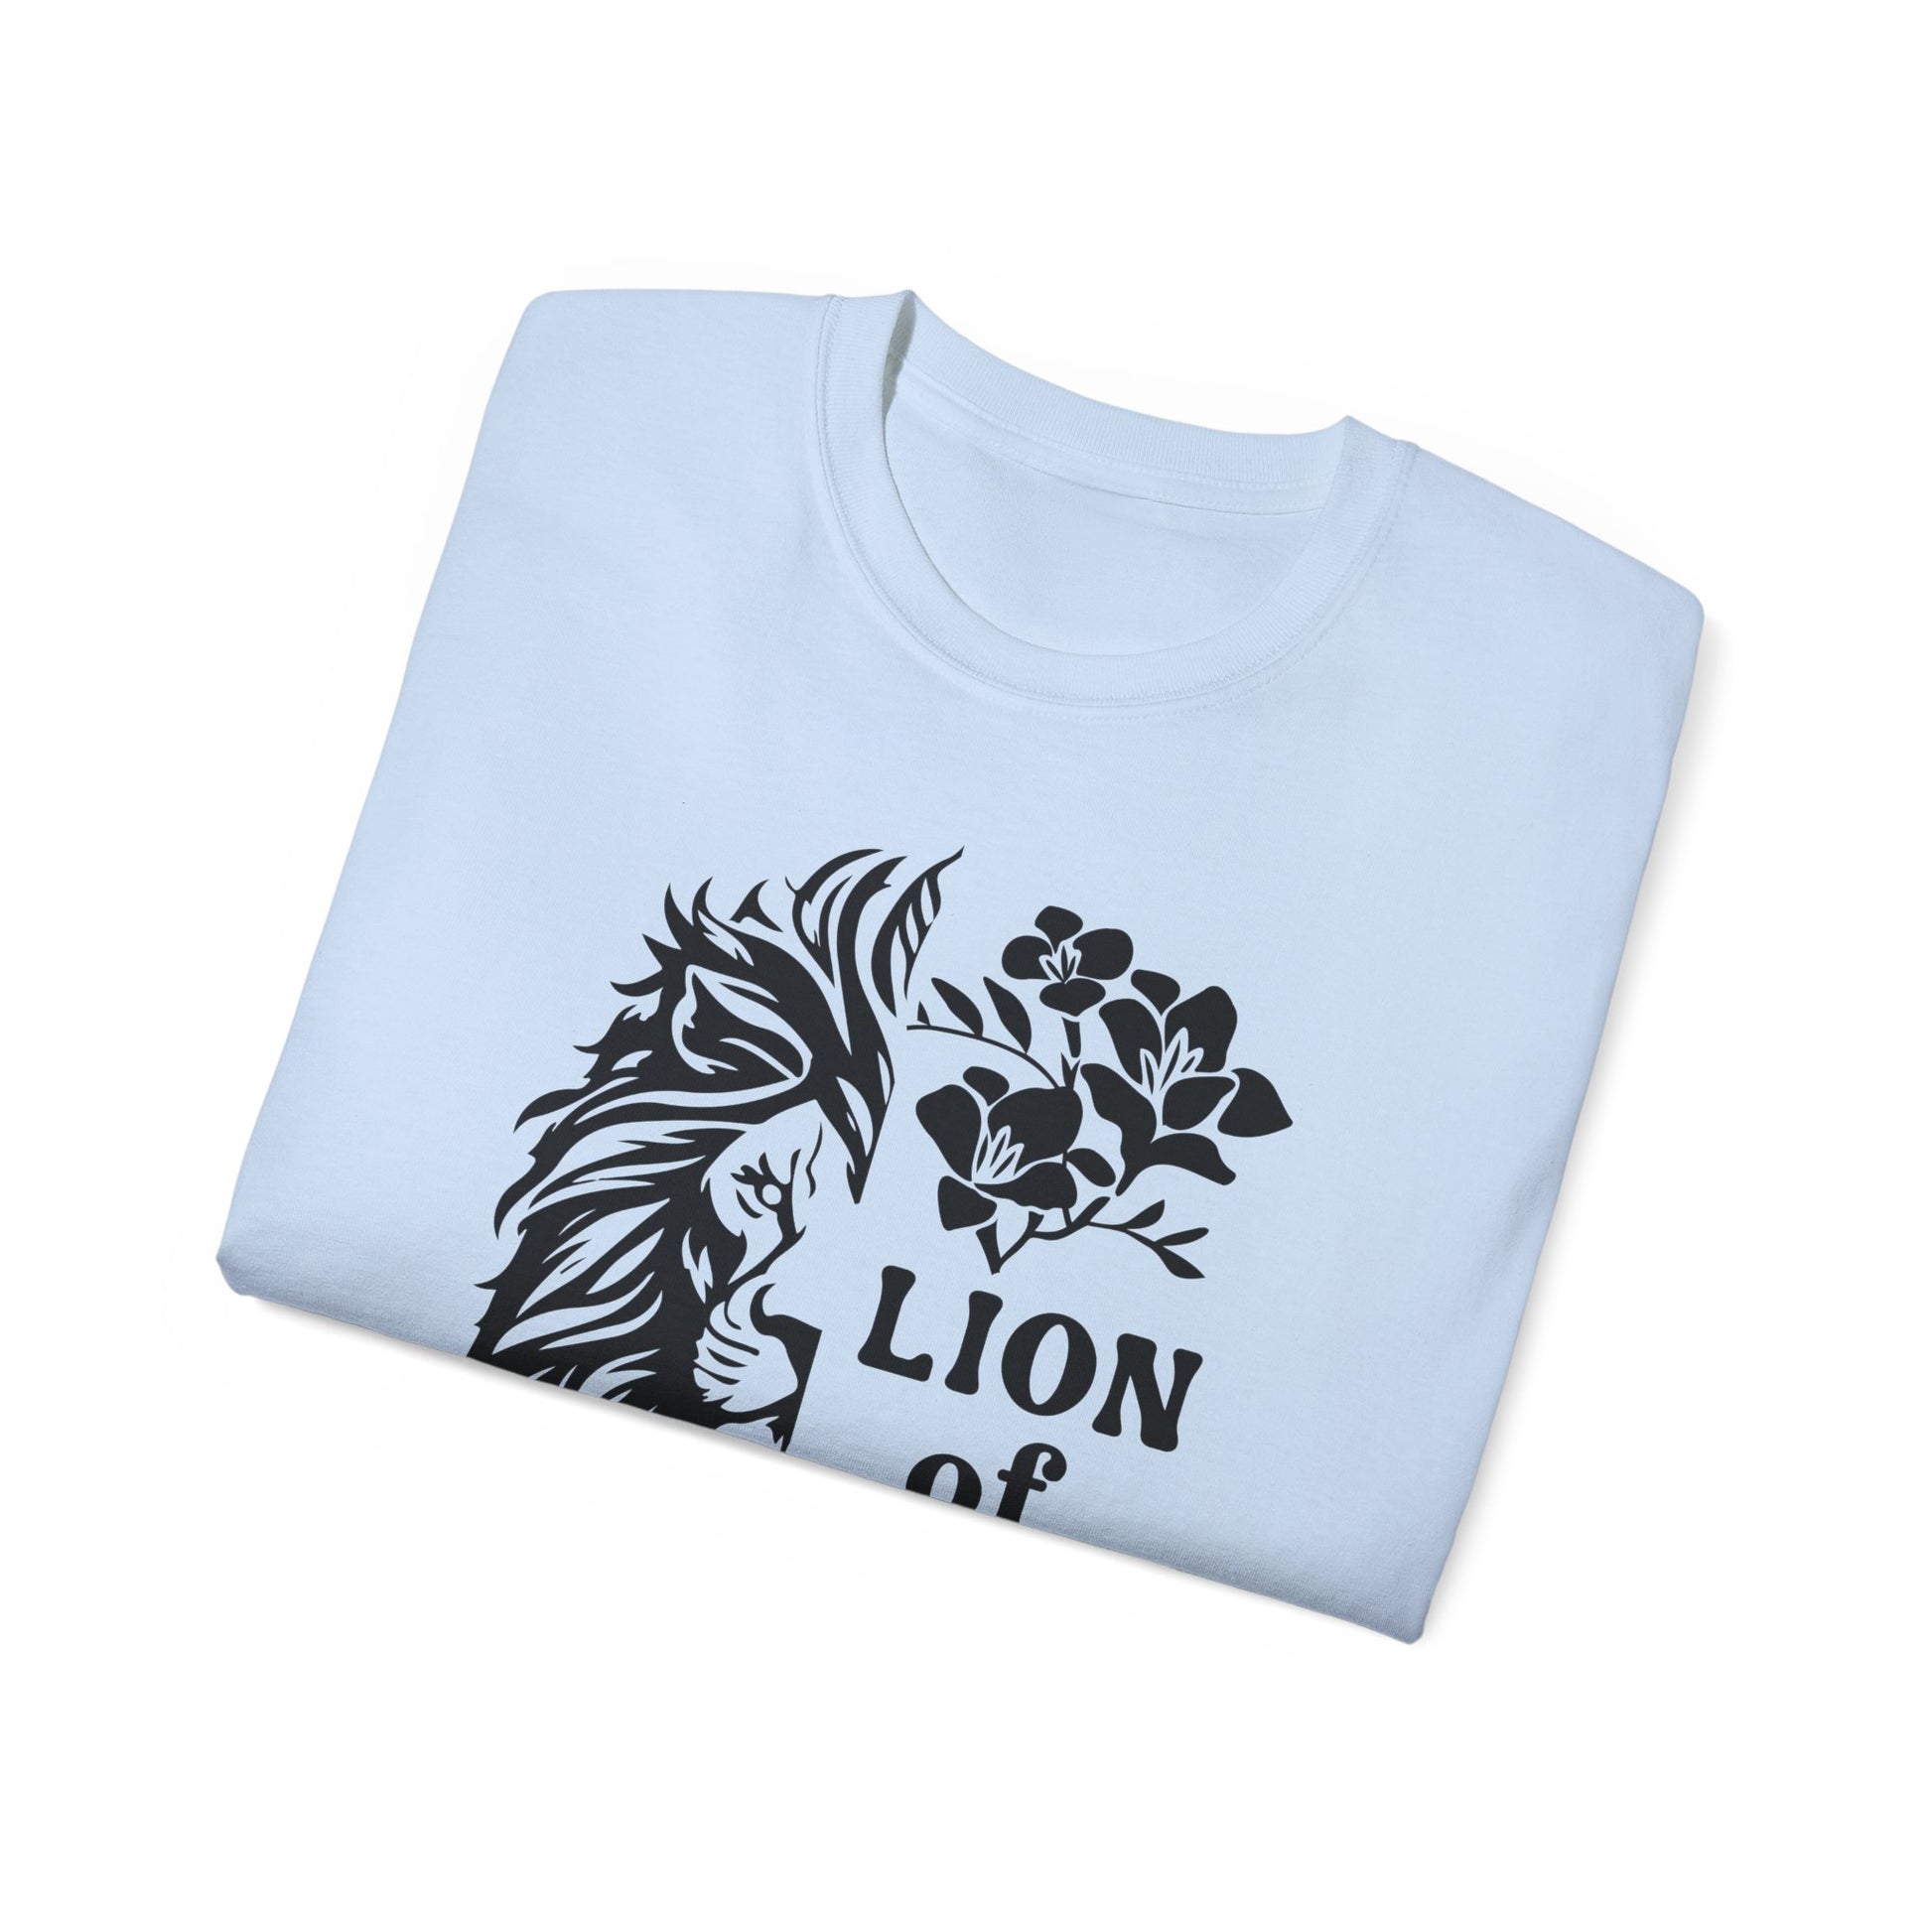 Lion Of Judah Women's Christian T-shirt Printify